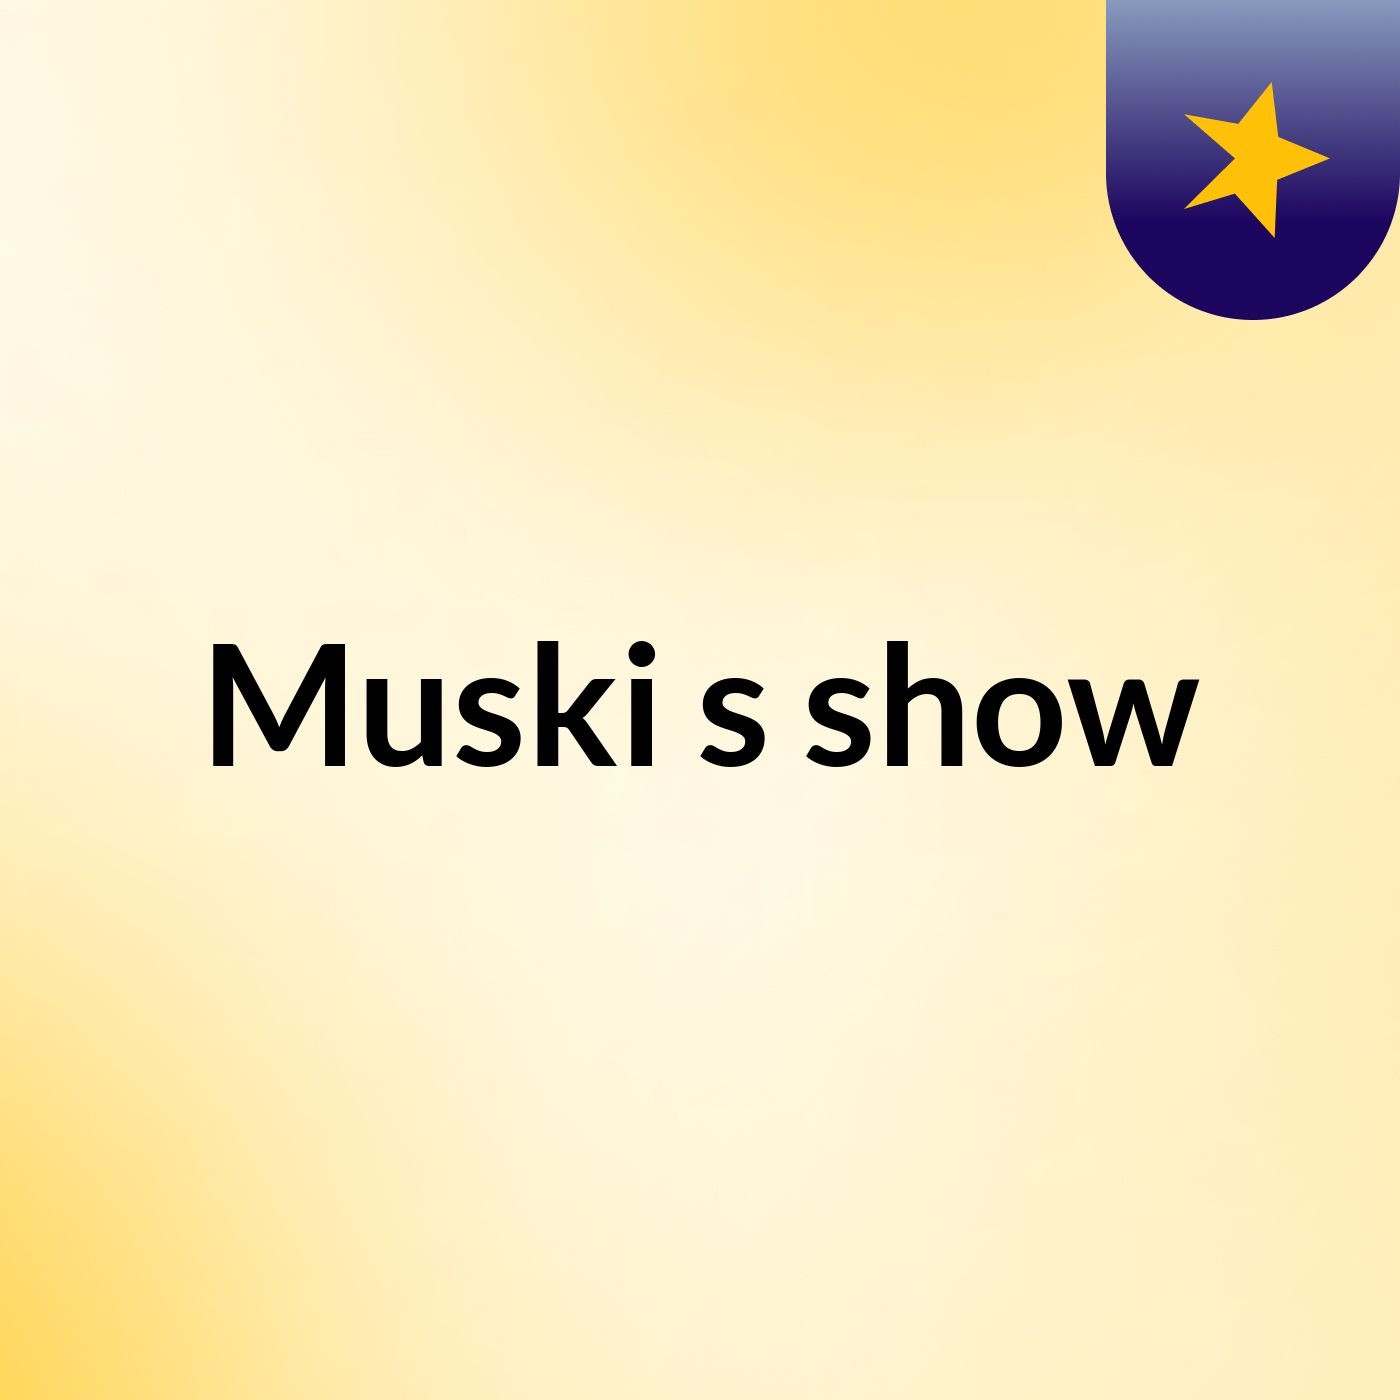 Muski's show